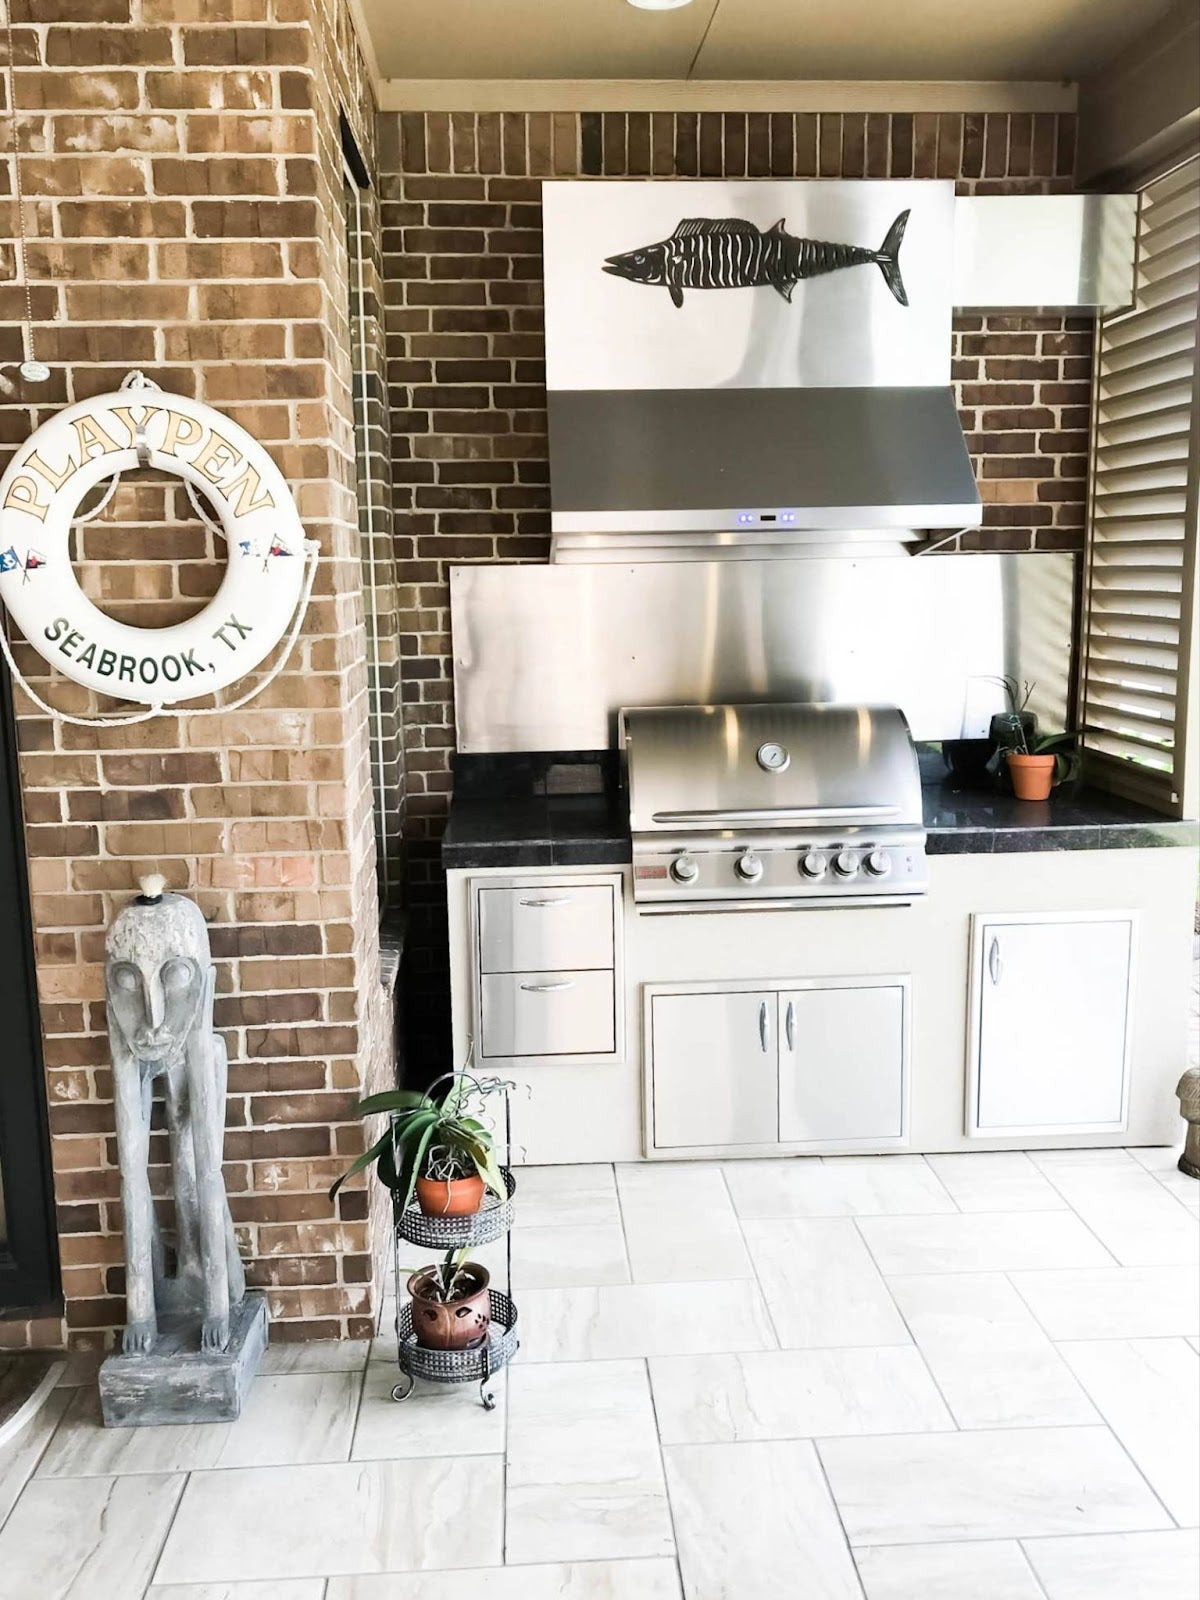 Proline range hood installed in a cozy corner outdoor kitchen with nautical decor and a fish wall art - prolinerangehoods.com